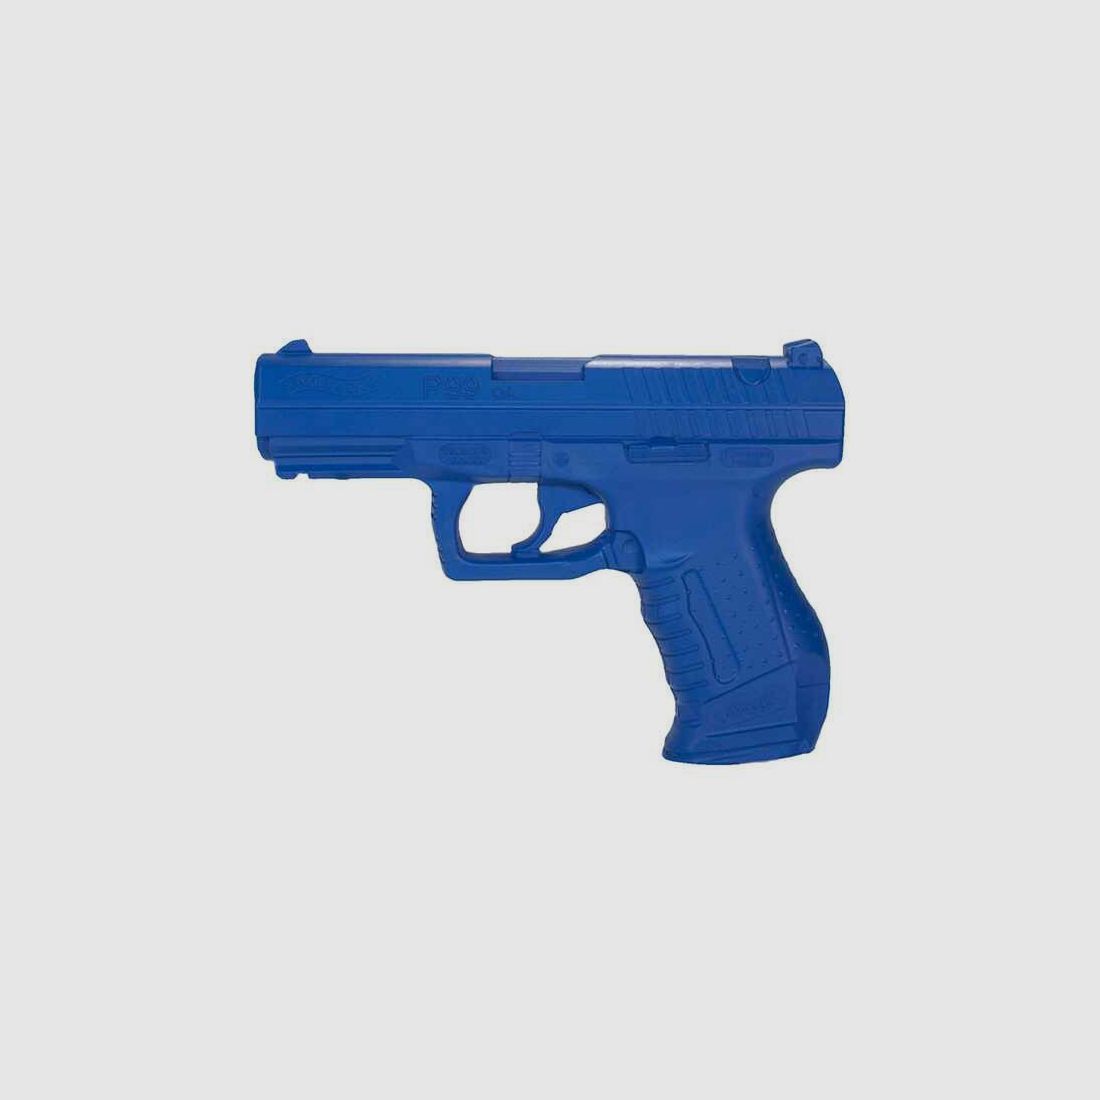 Trainingspist. Blue Guns Walther P99